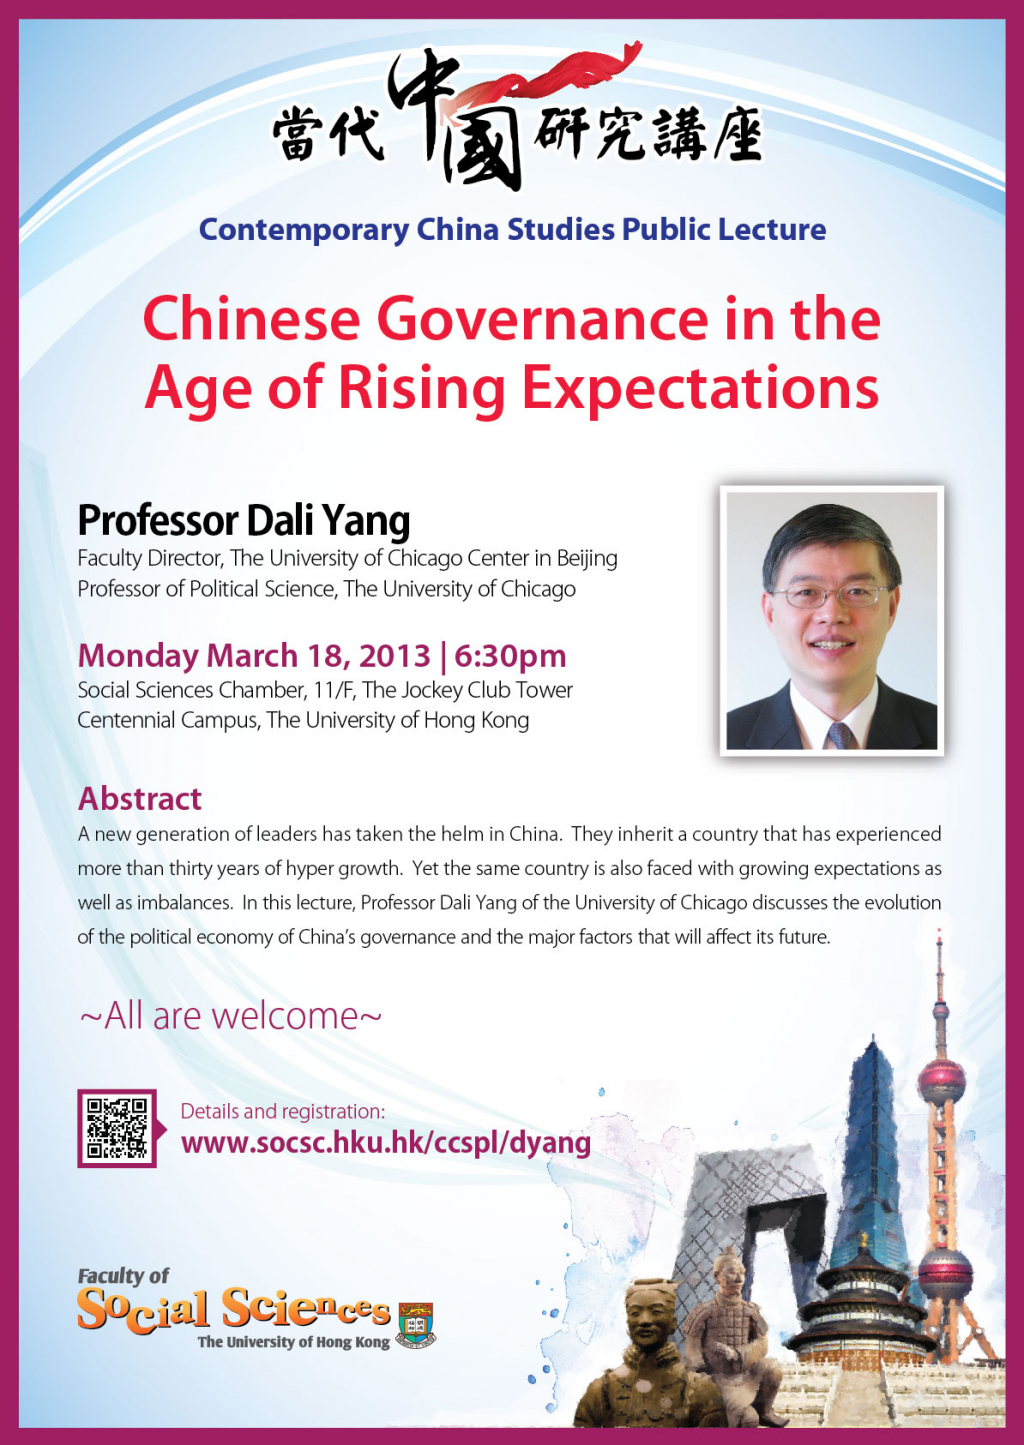 Contemporary China Studies Public Lecture